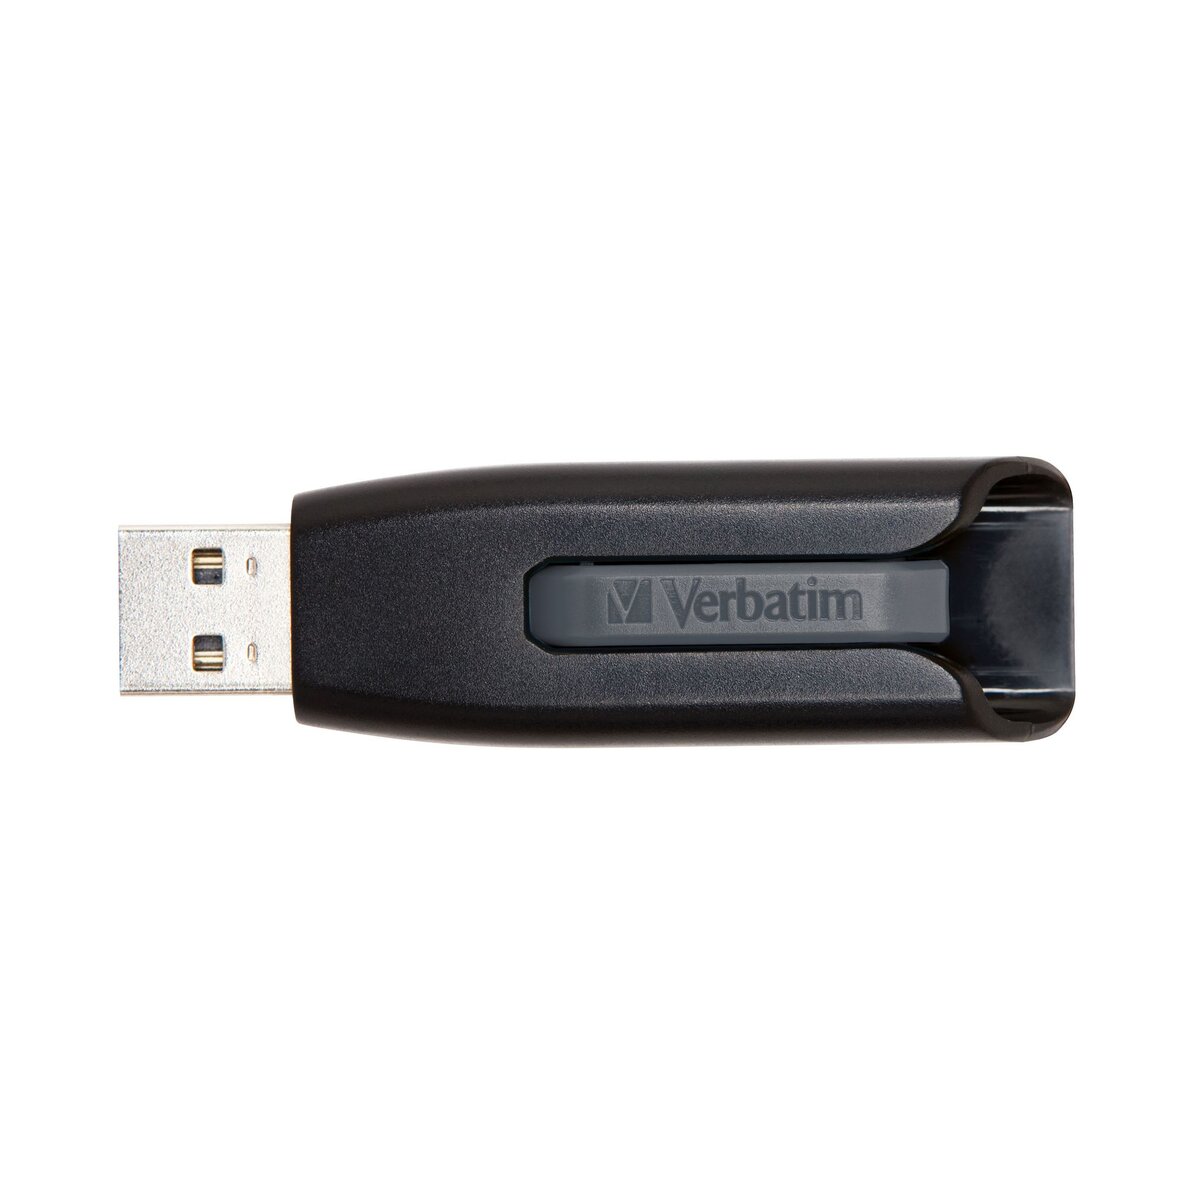 VERBATIM Cle usb Store'n'Go V3 Drive 64 GB